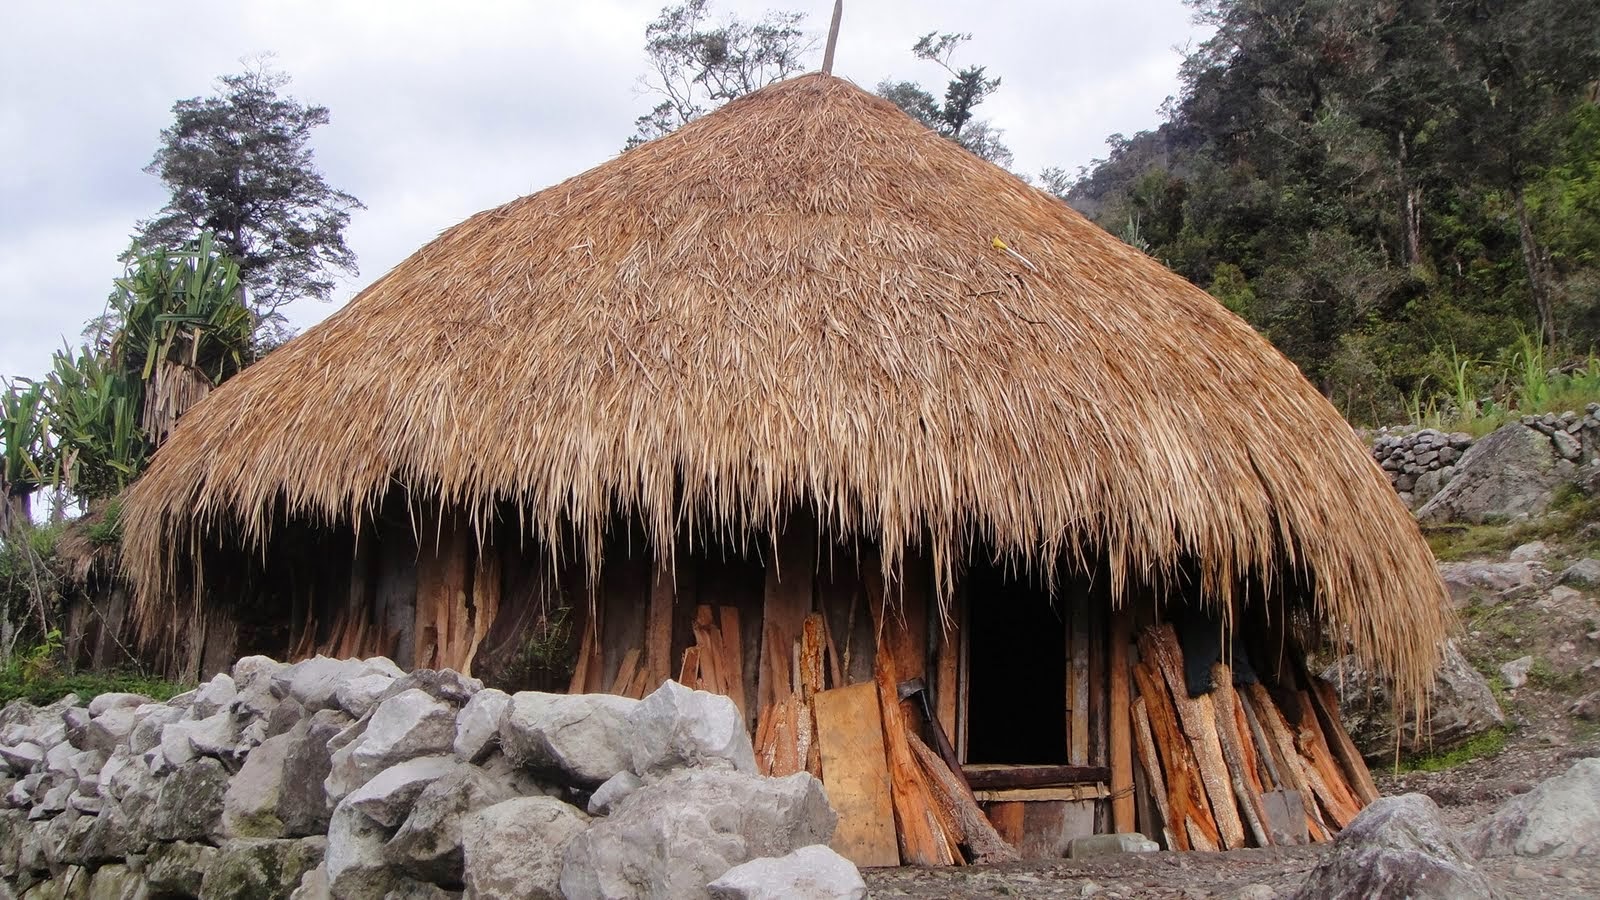  maluku utara rumah adat baileo provinsi papua barat rumah adat honai